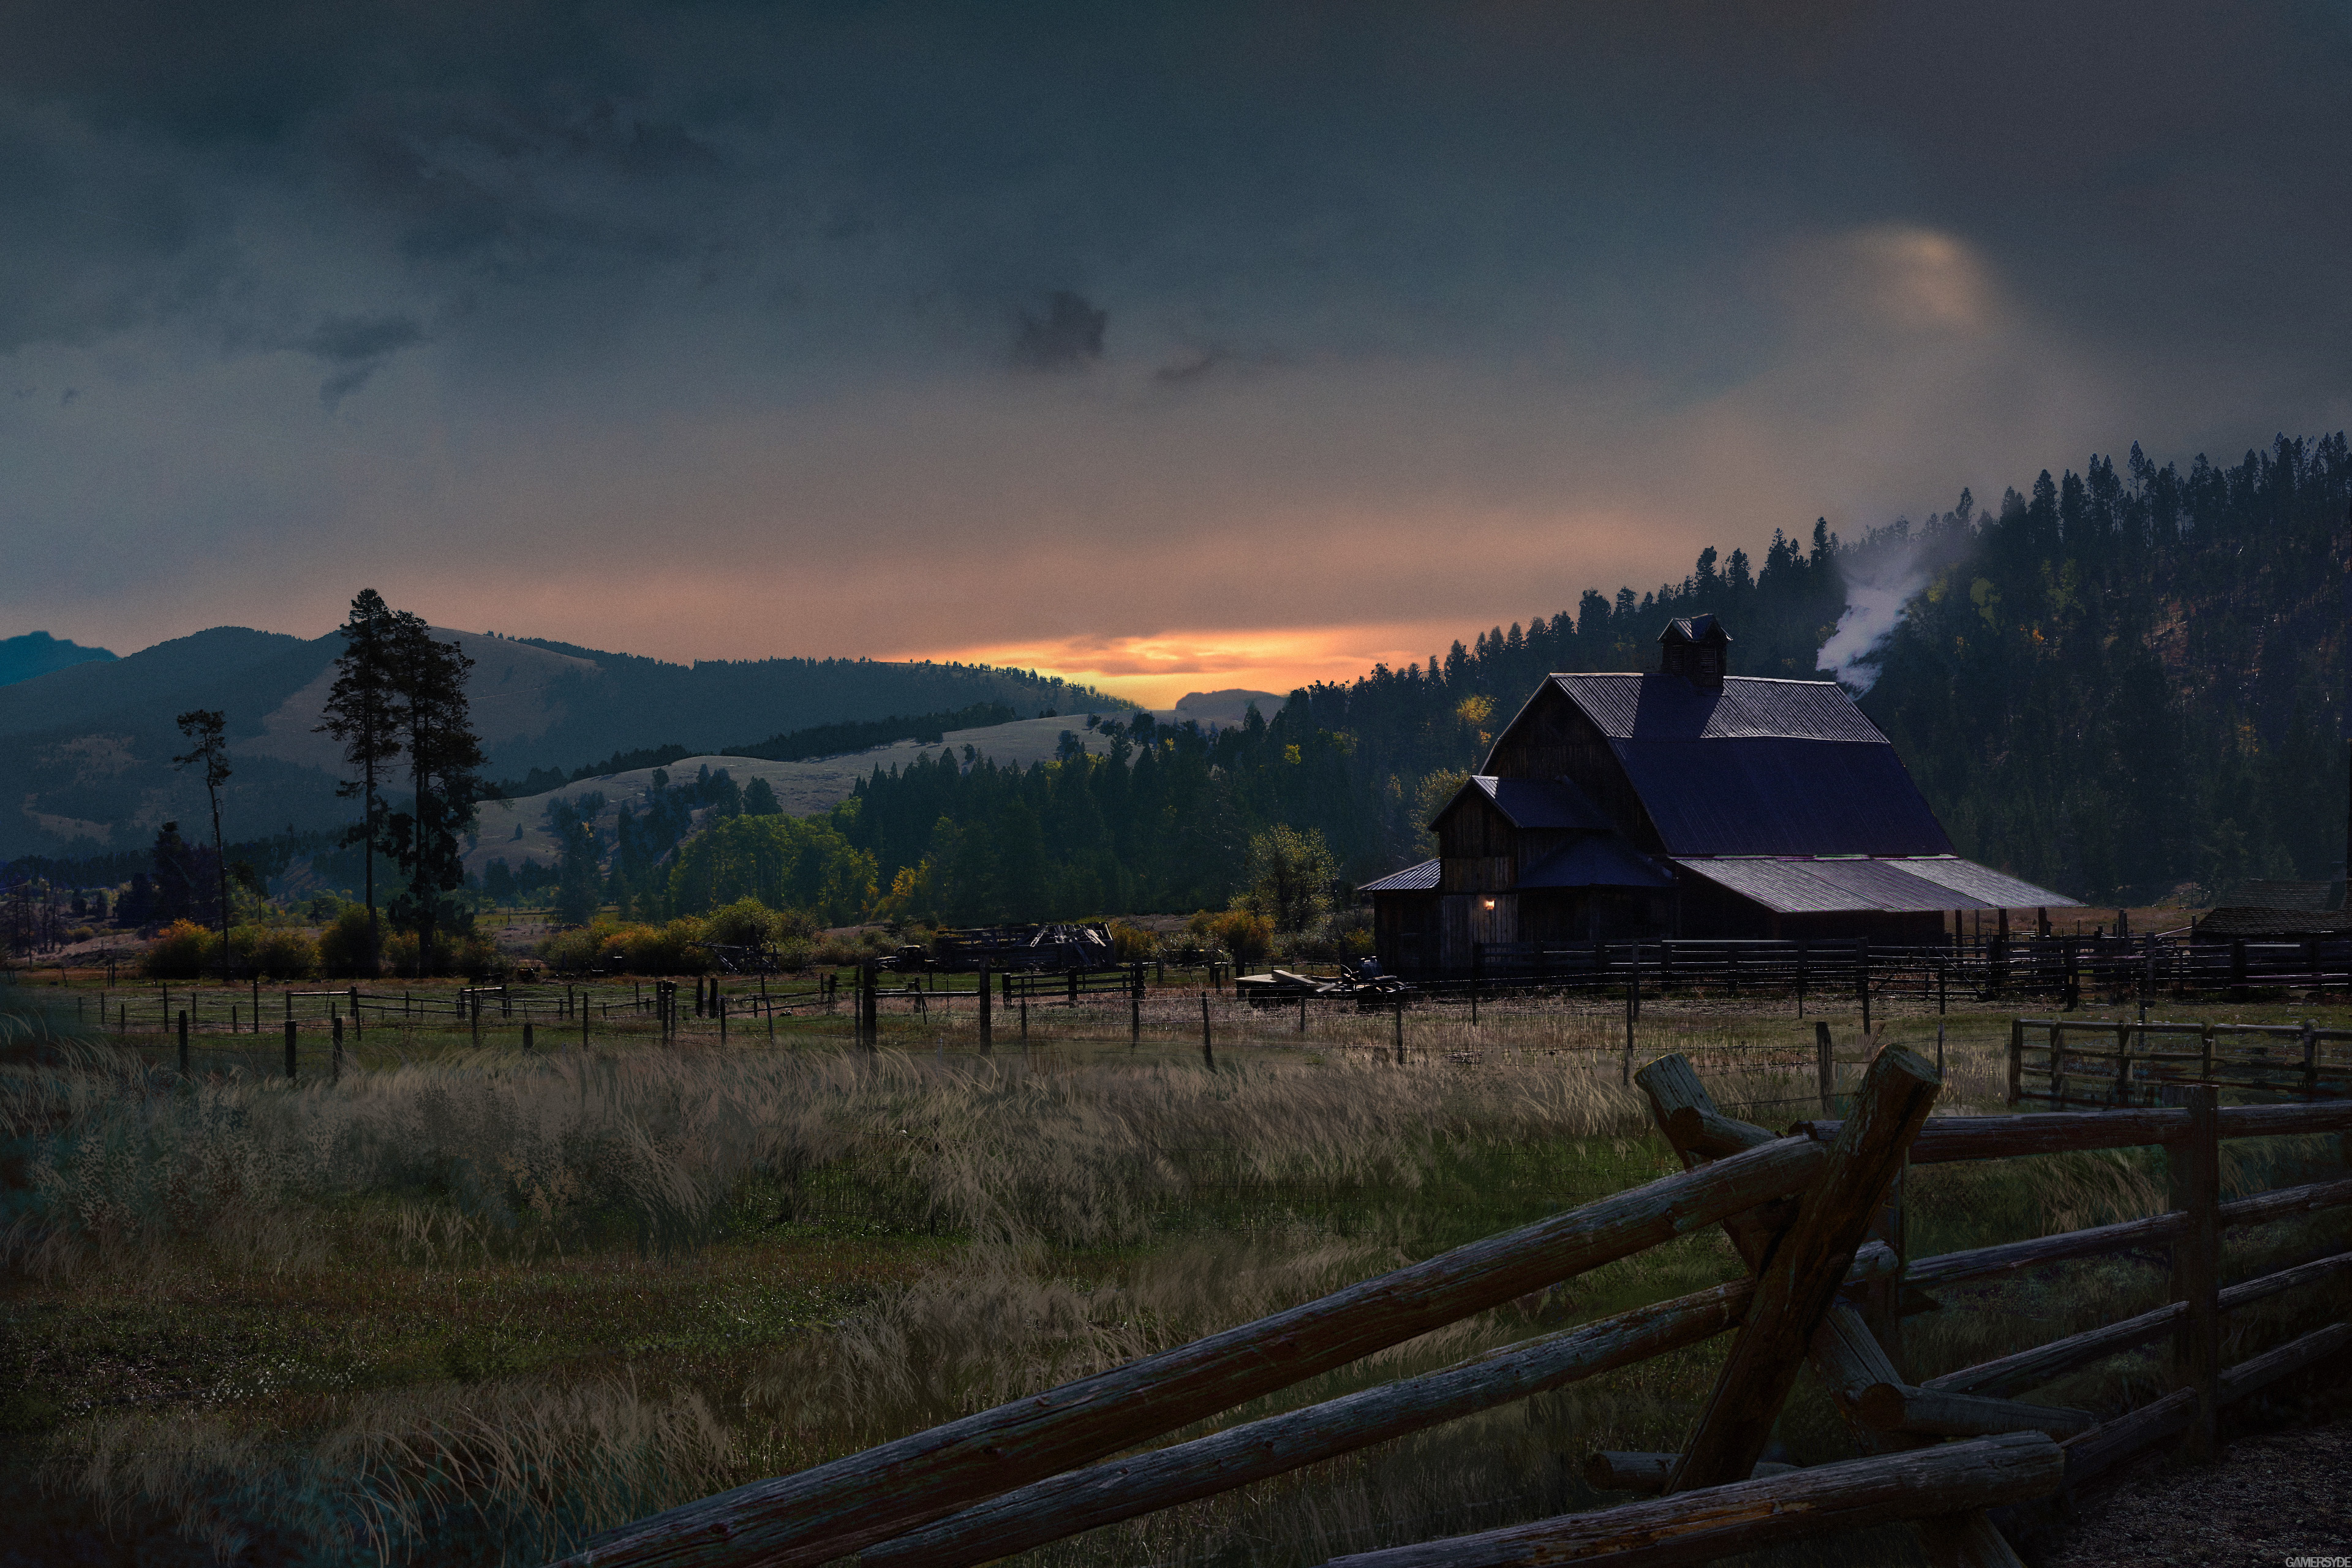 Far Cry 5: Official Announce Trailer